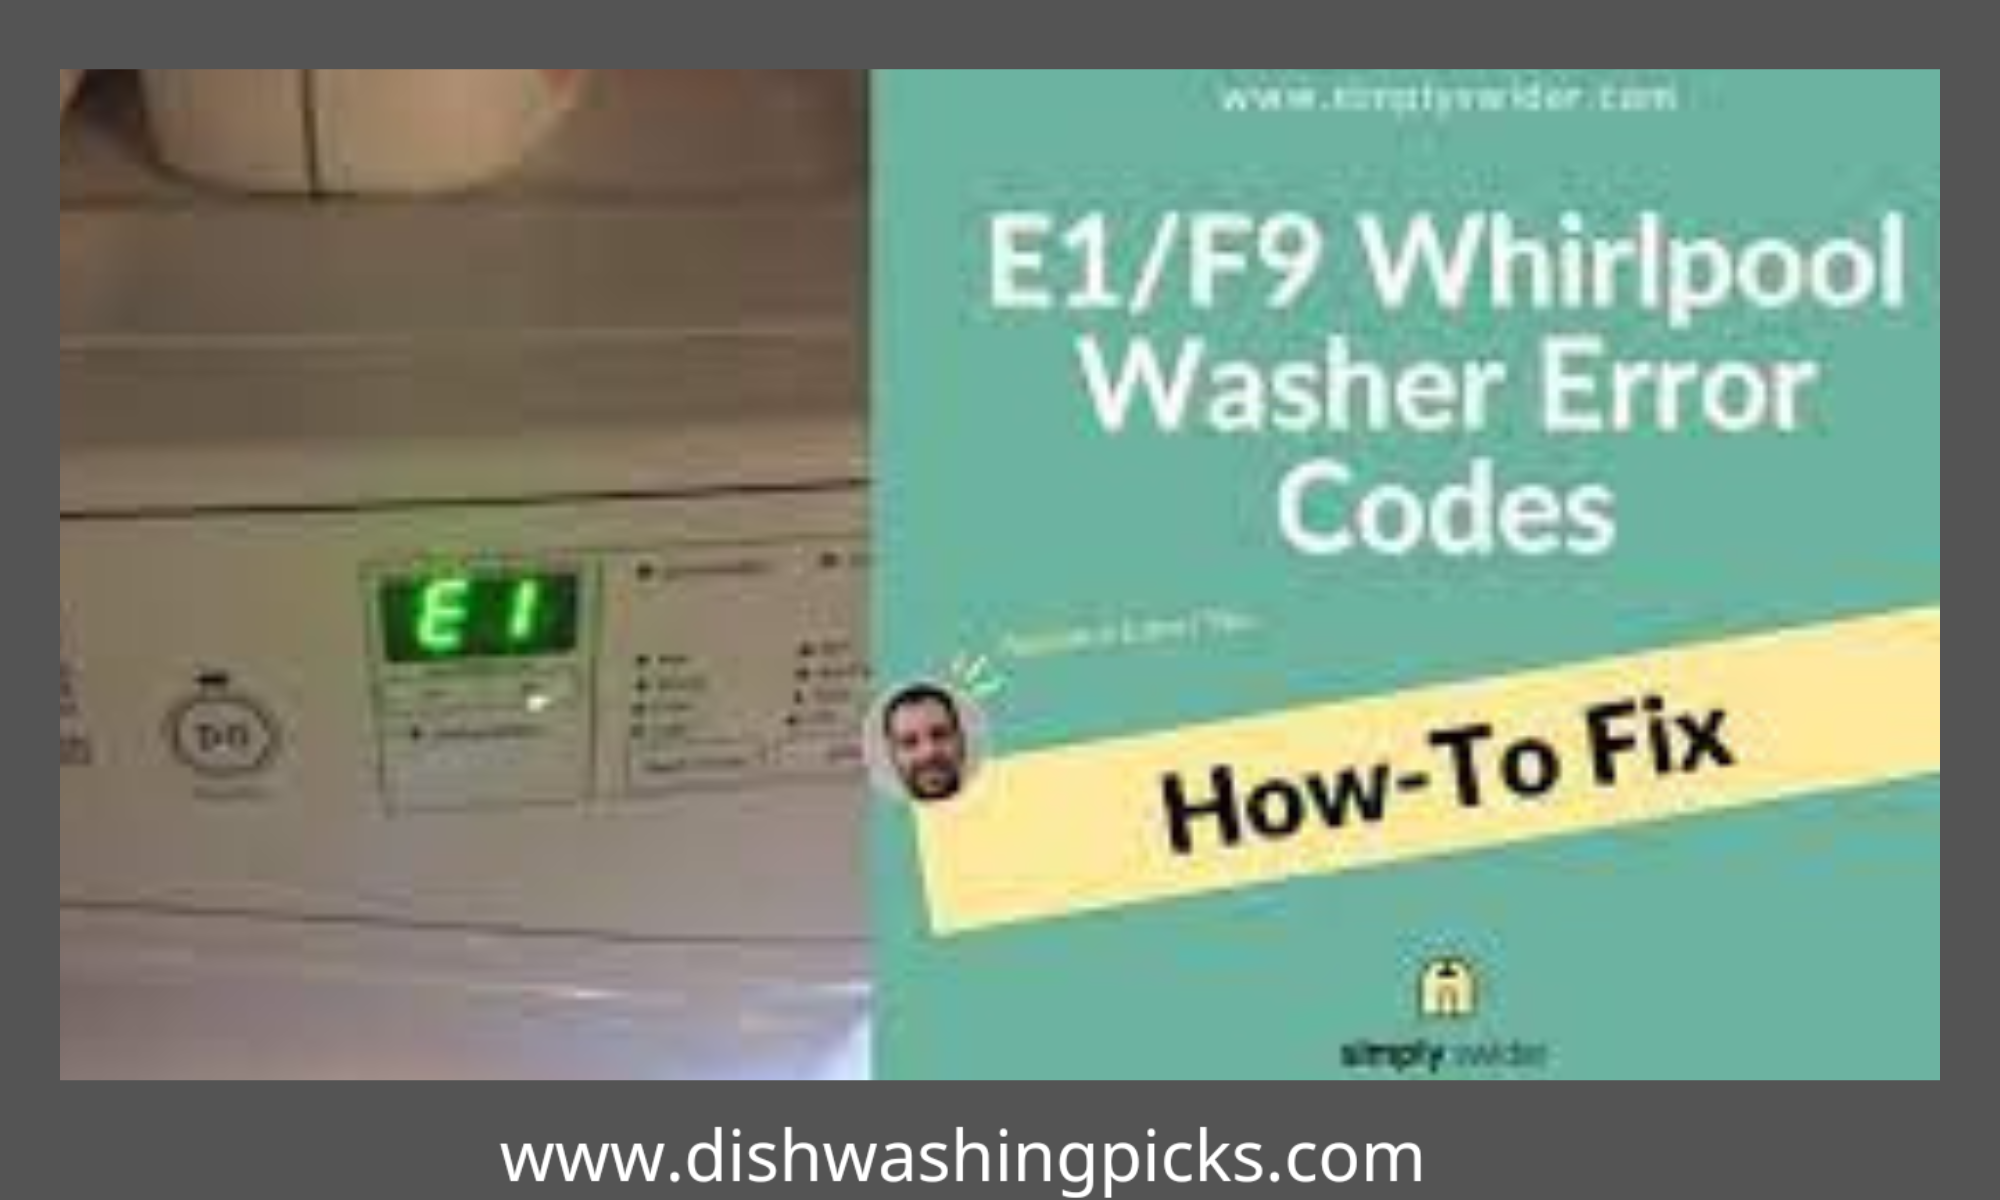 Fix E1 F9 Error Code on Dishwasher